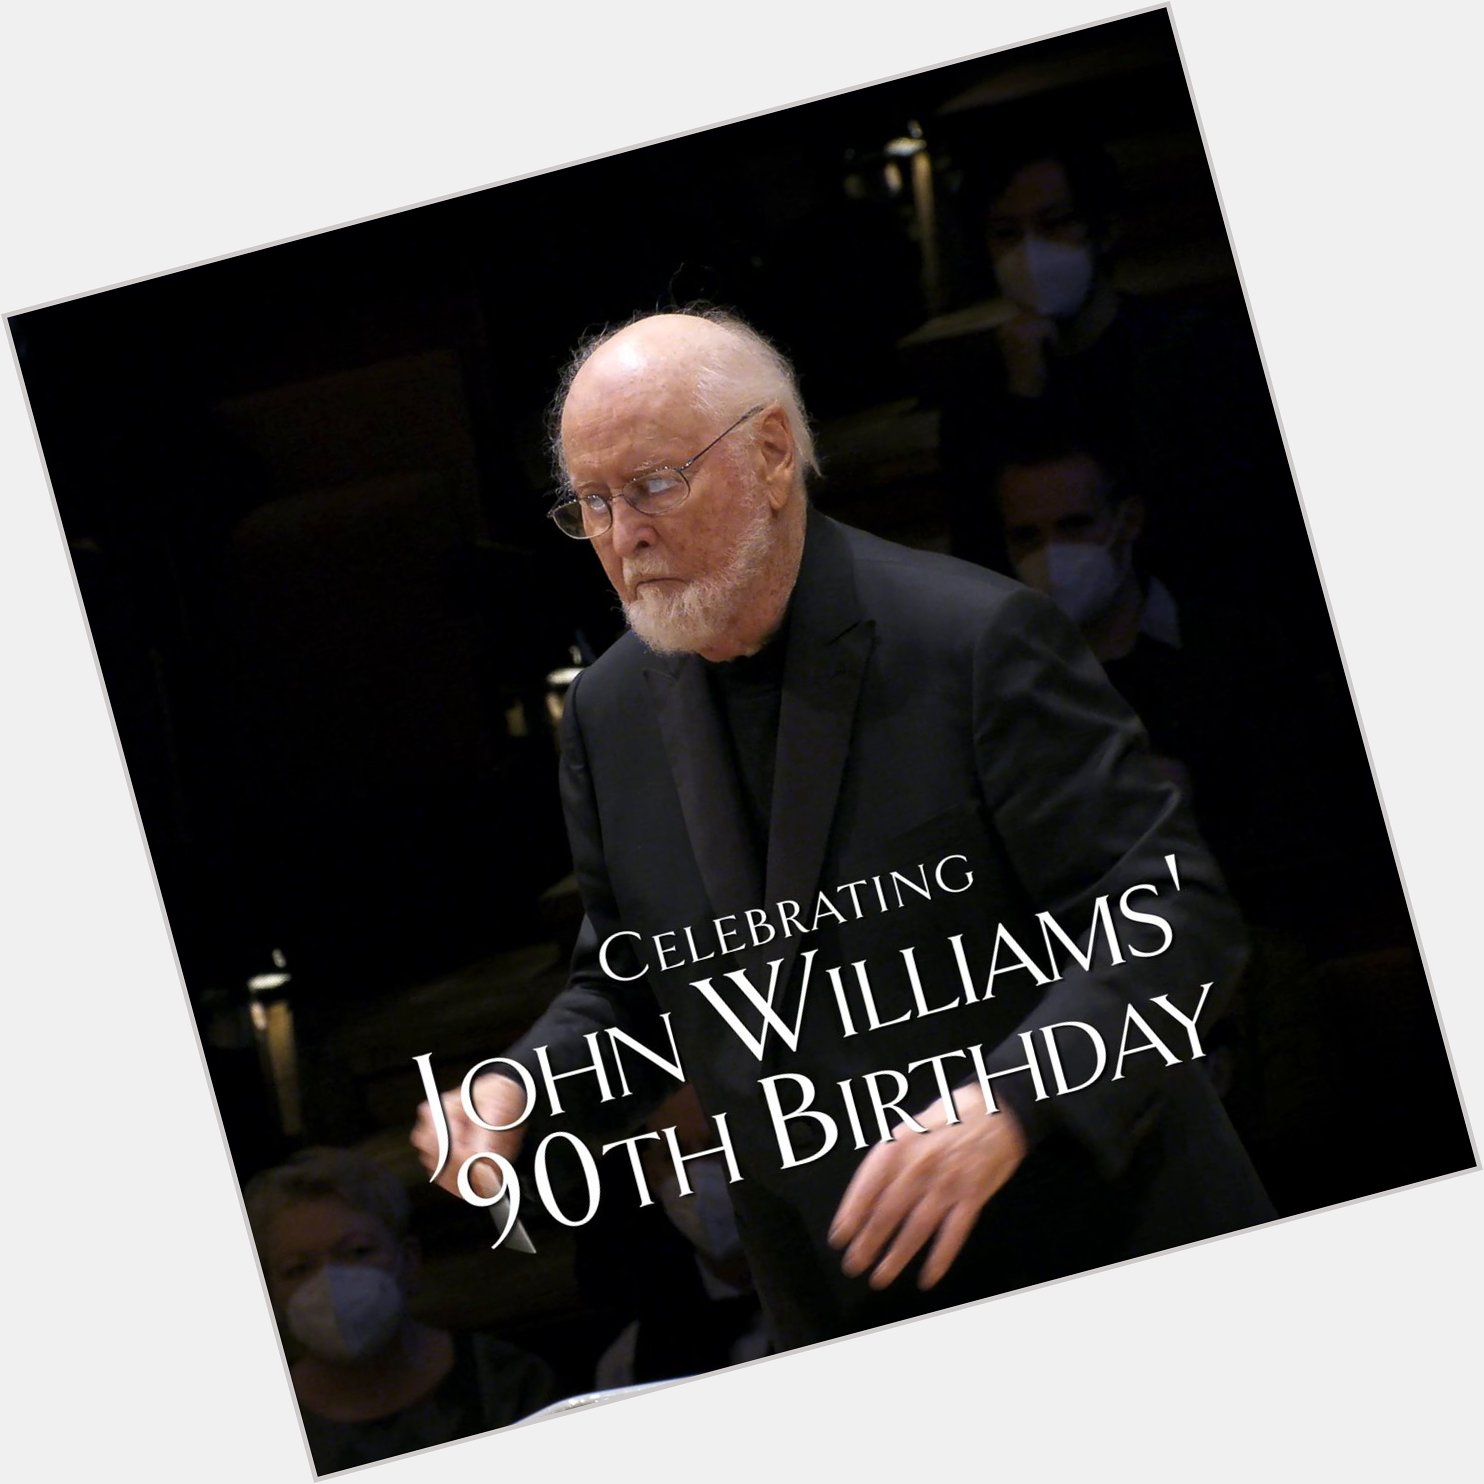 This score has inspired generations of heroes. Happy birthday to maestro himself, John Williams! 